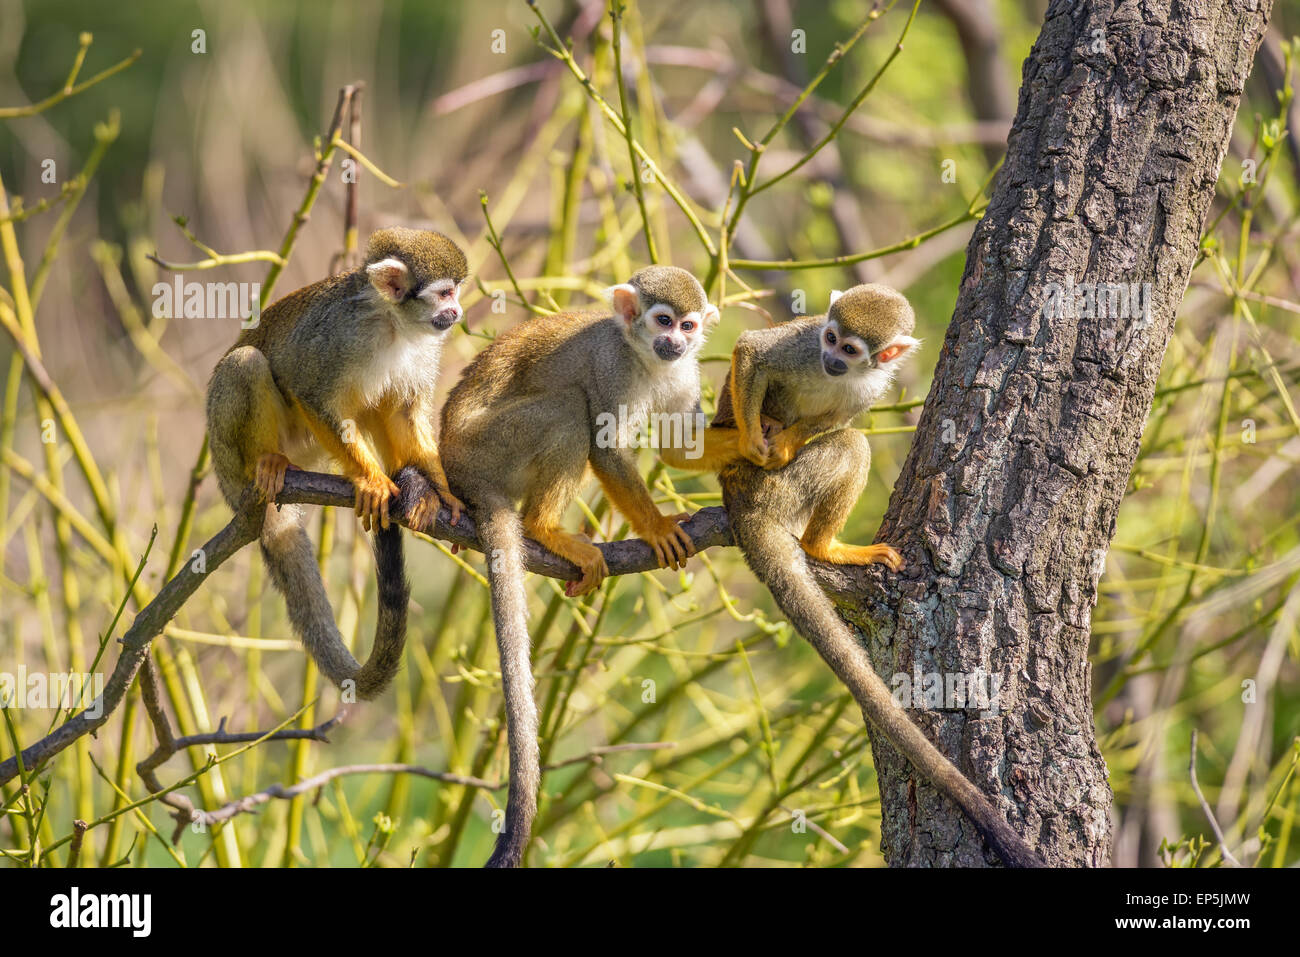 Tres monos ardilla (Saimiri sciureus) jugando en la rama de un árbol Foto de stock